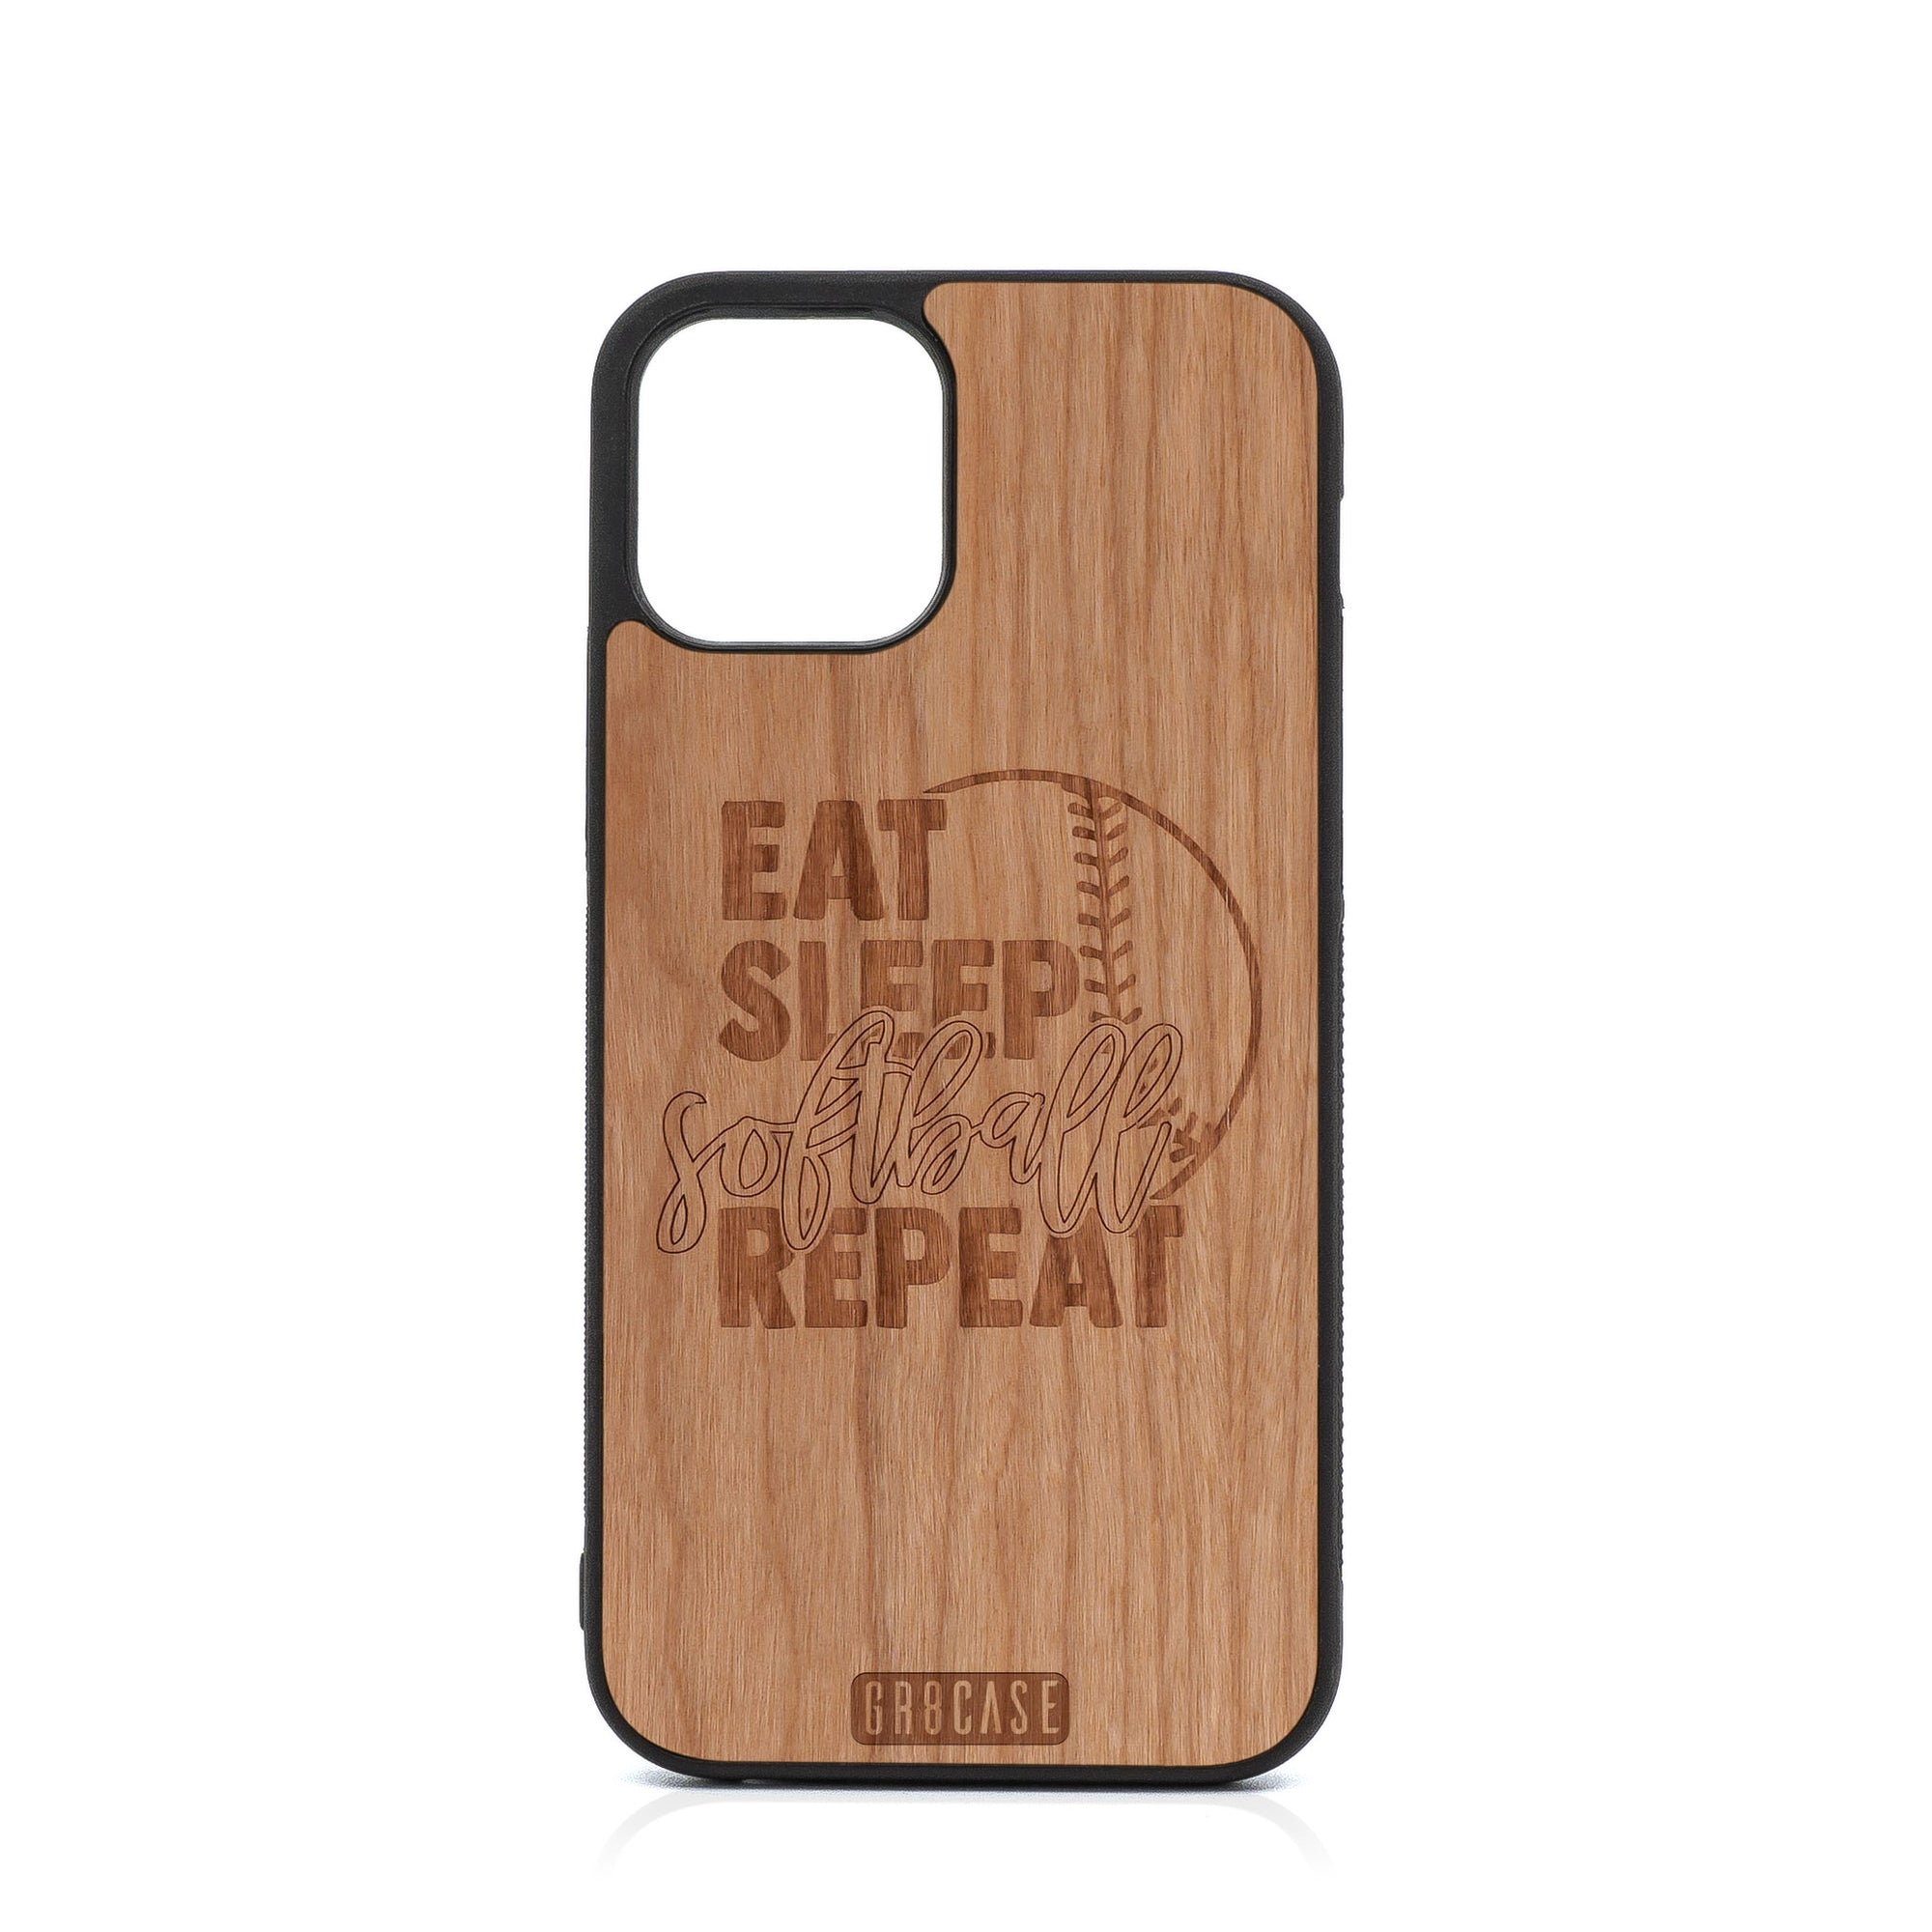 Eat Sleep Softball Repeat Design Wood Case For iPhone 12